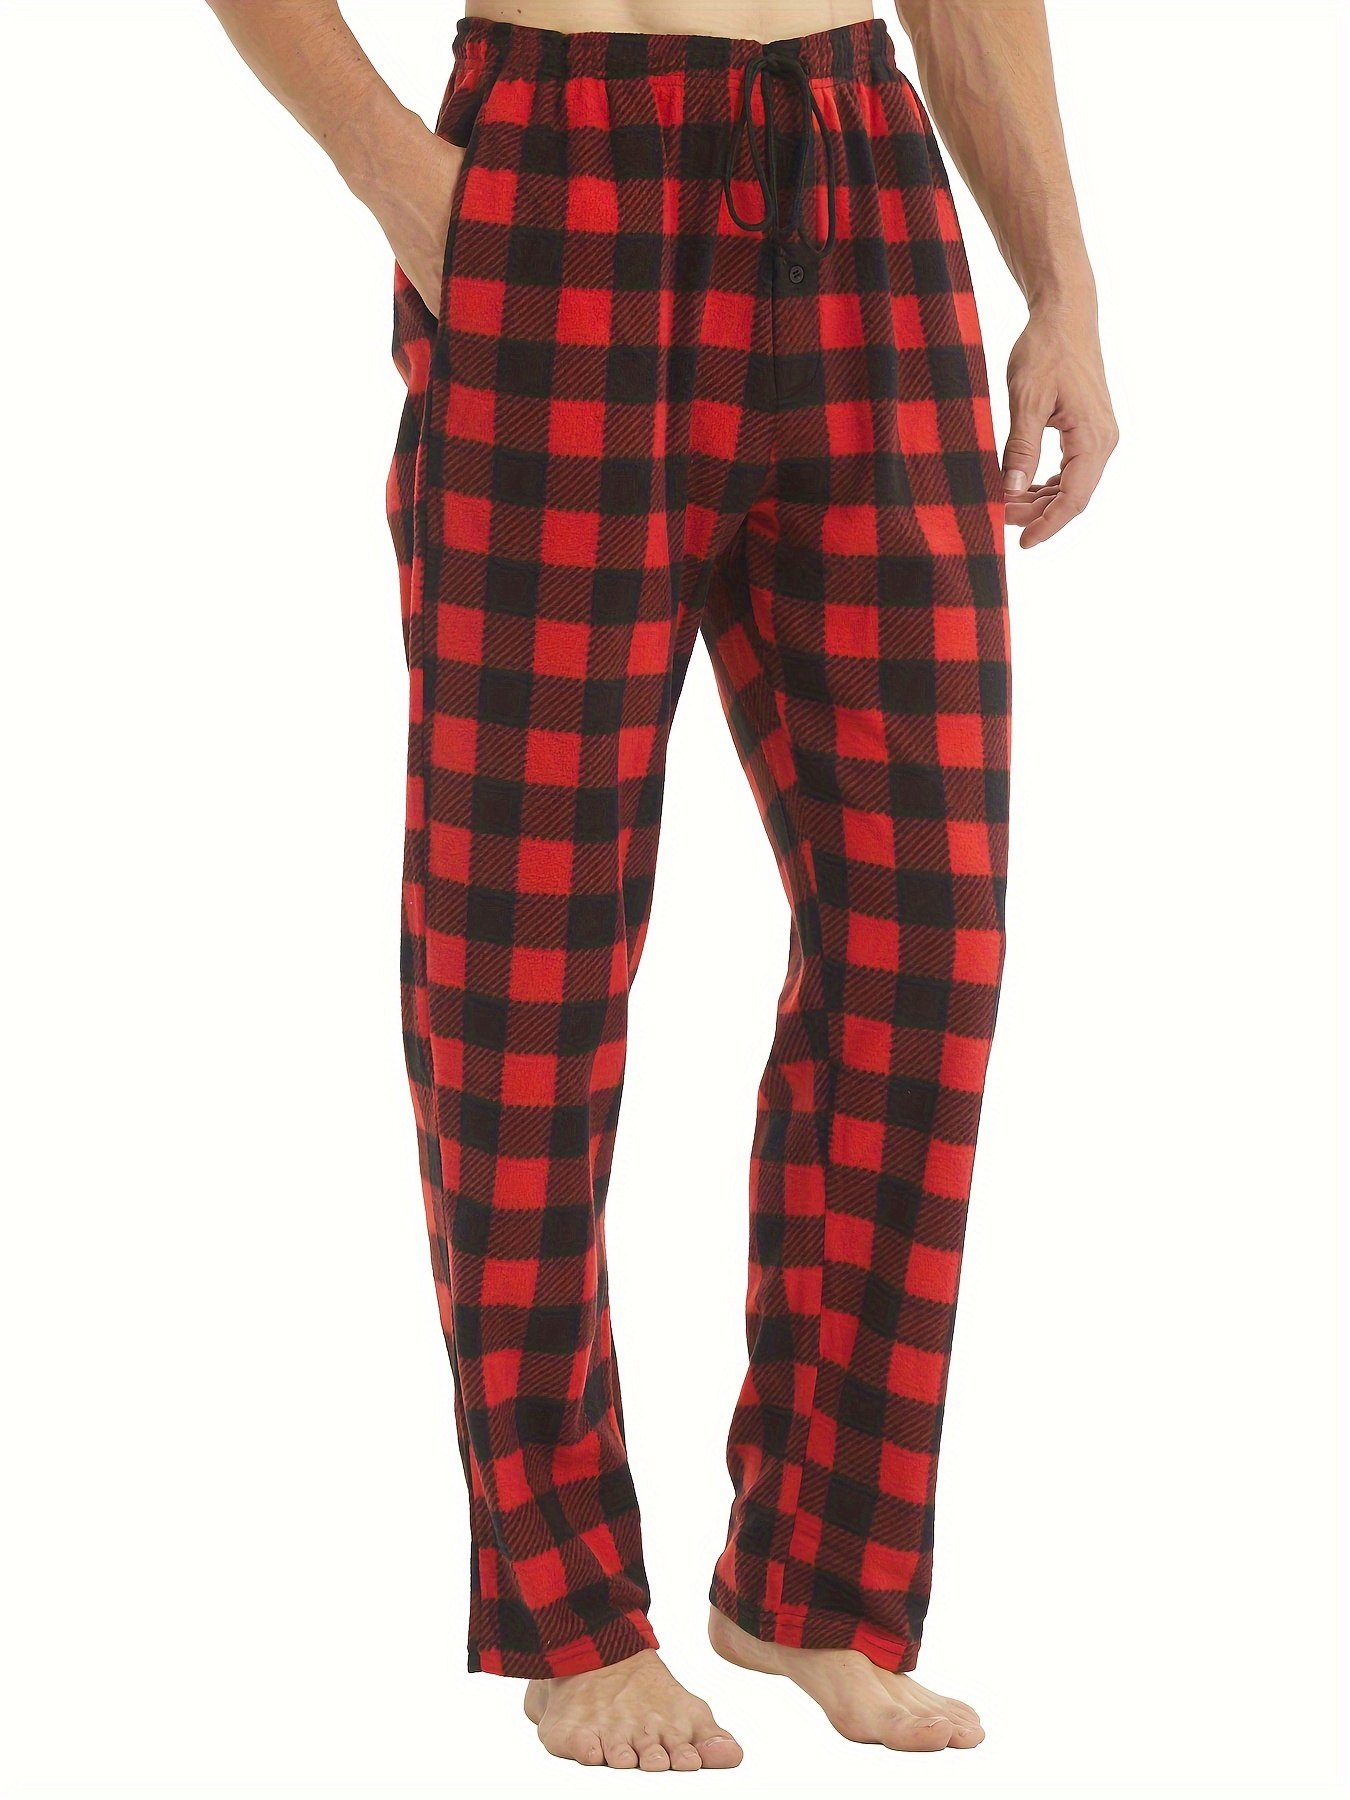 2 Pack: Men's Cotton Super-Soft Flannel Plaid Pajama Pants/Lounge Bottoms  with Pockets : : Clothing, Shoes & Accessories